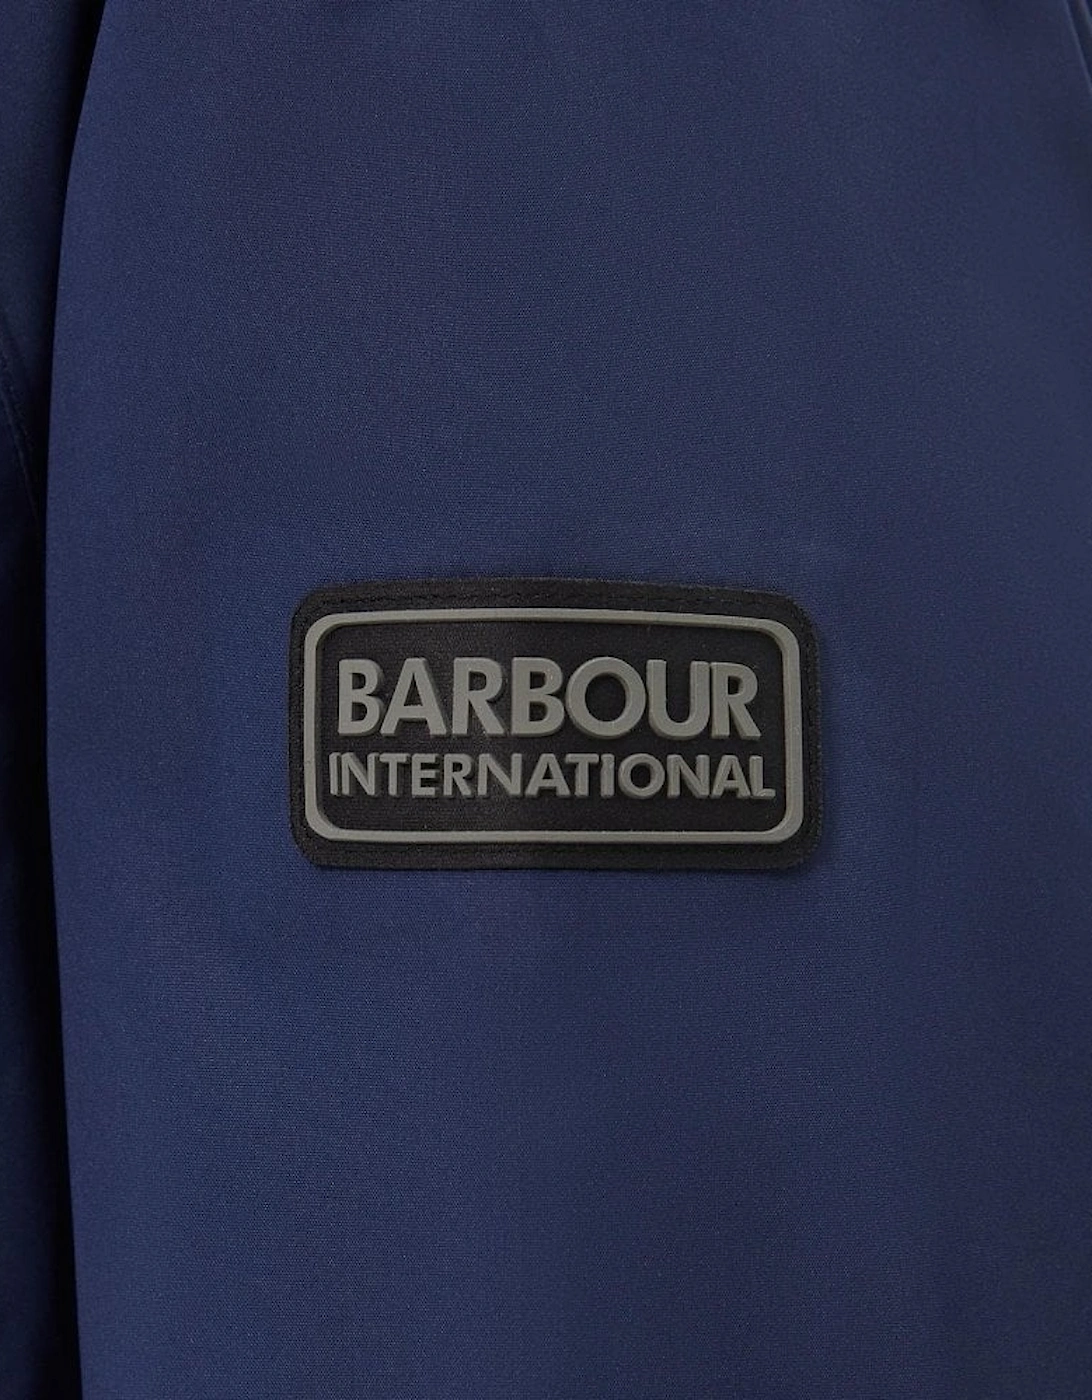 men's Oxford Navy Abbots Waterproof Jacket